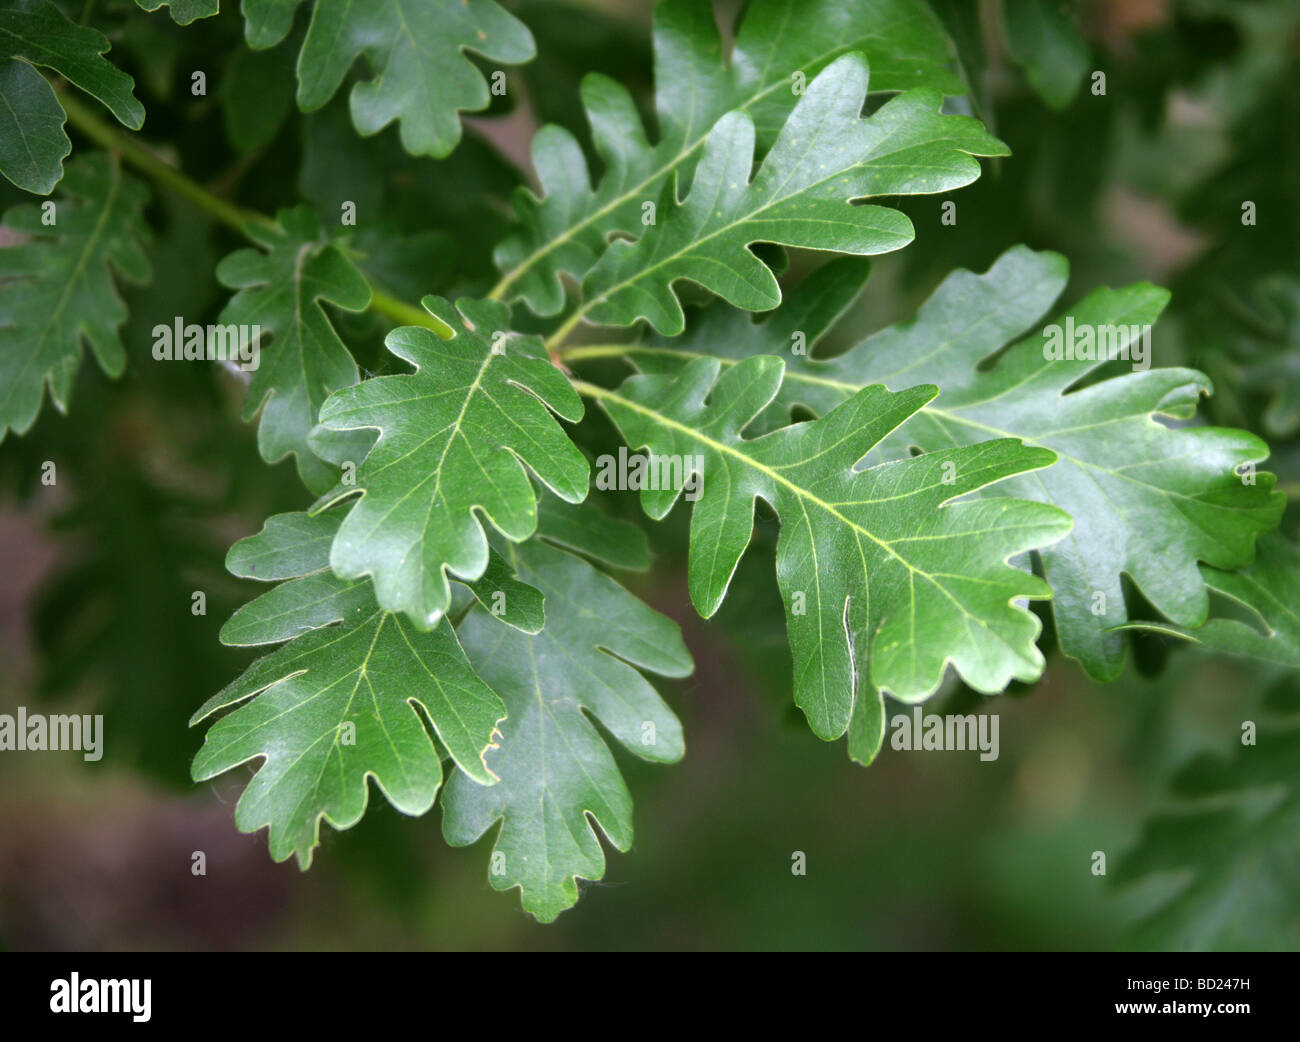 Kasnak hojas de roble, Quercus vulcanica, Fagaceae, del Suroeste de Asia Foto de stock